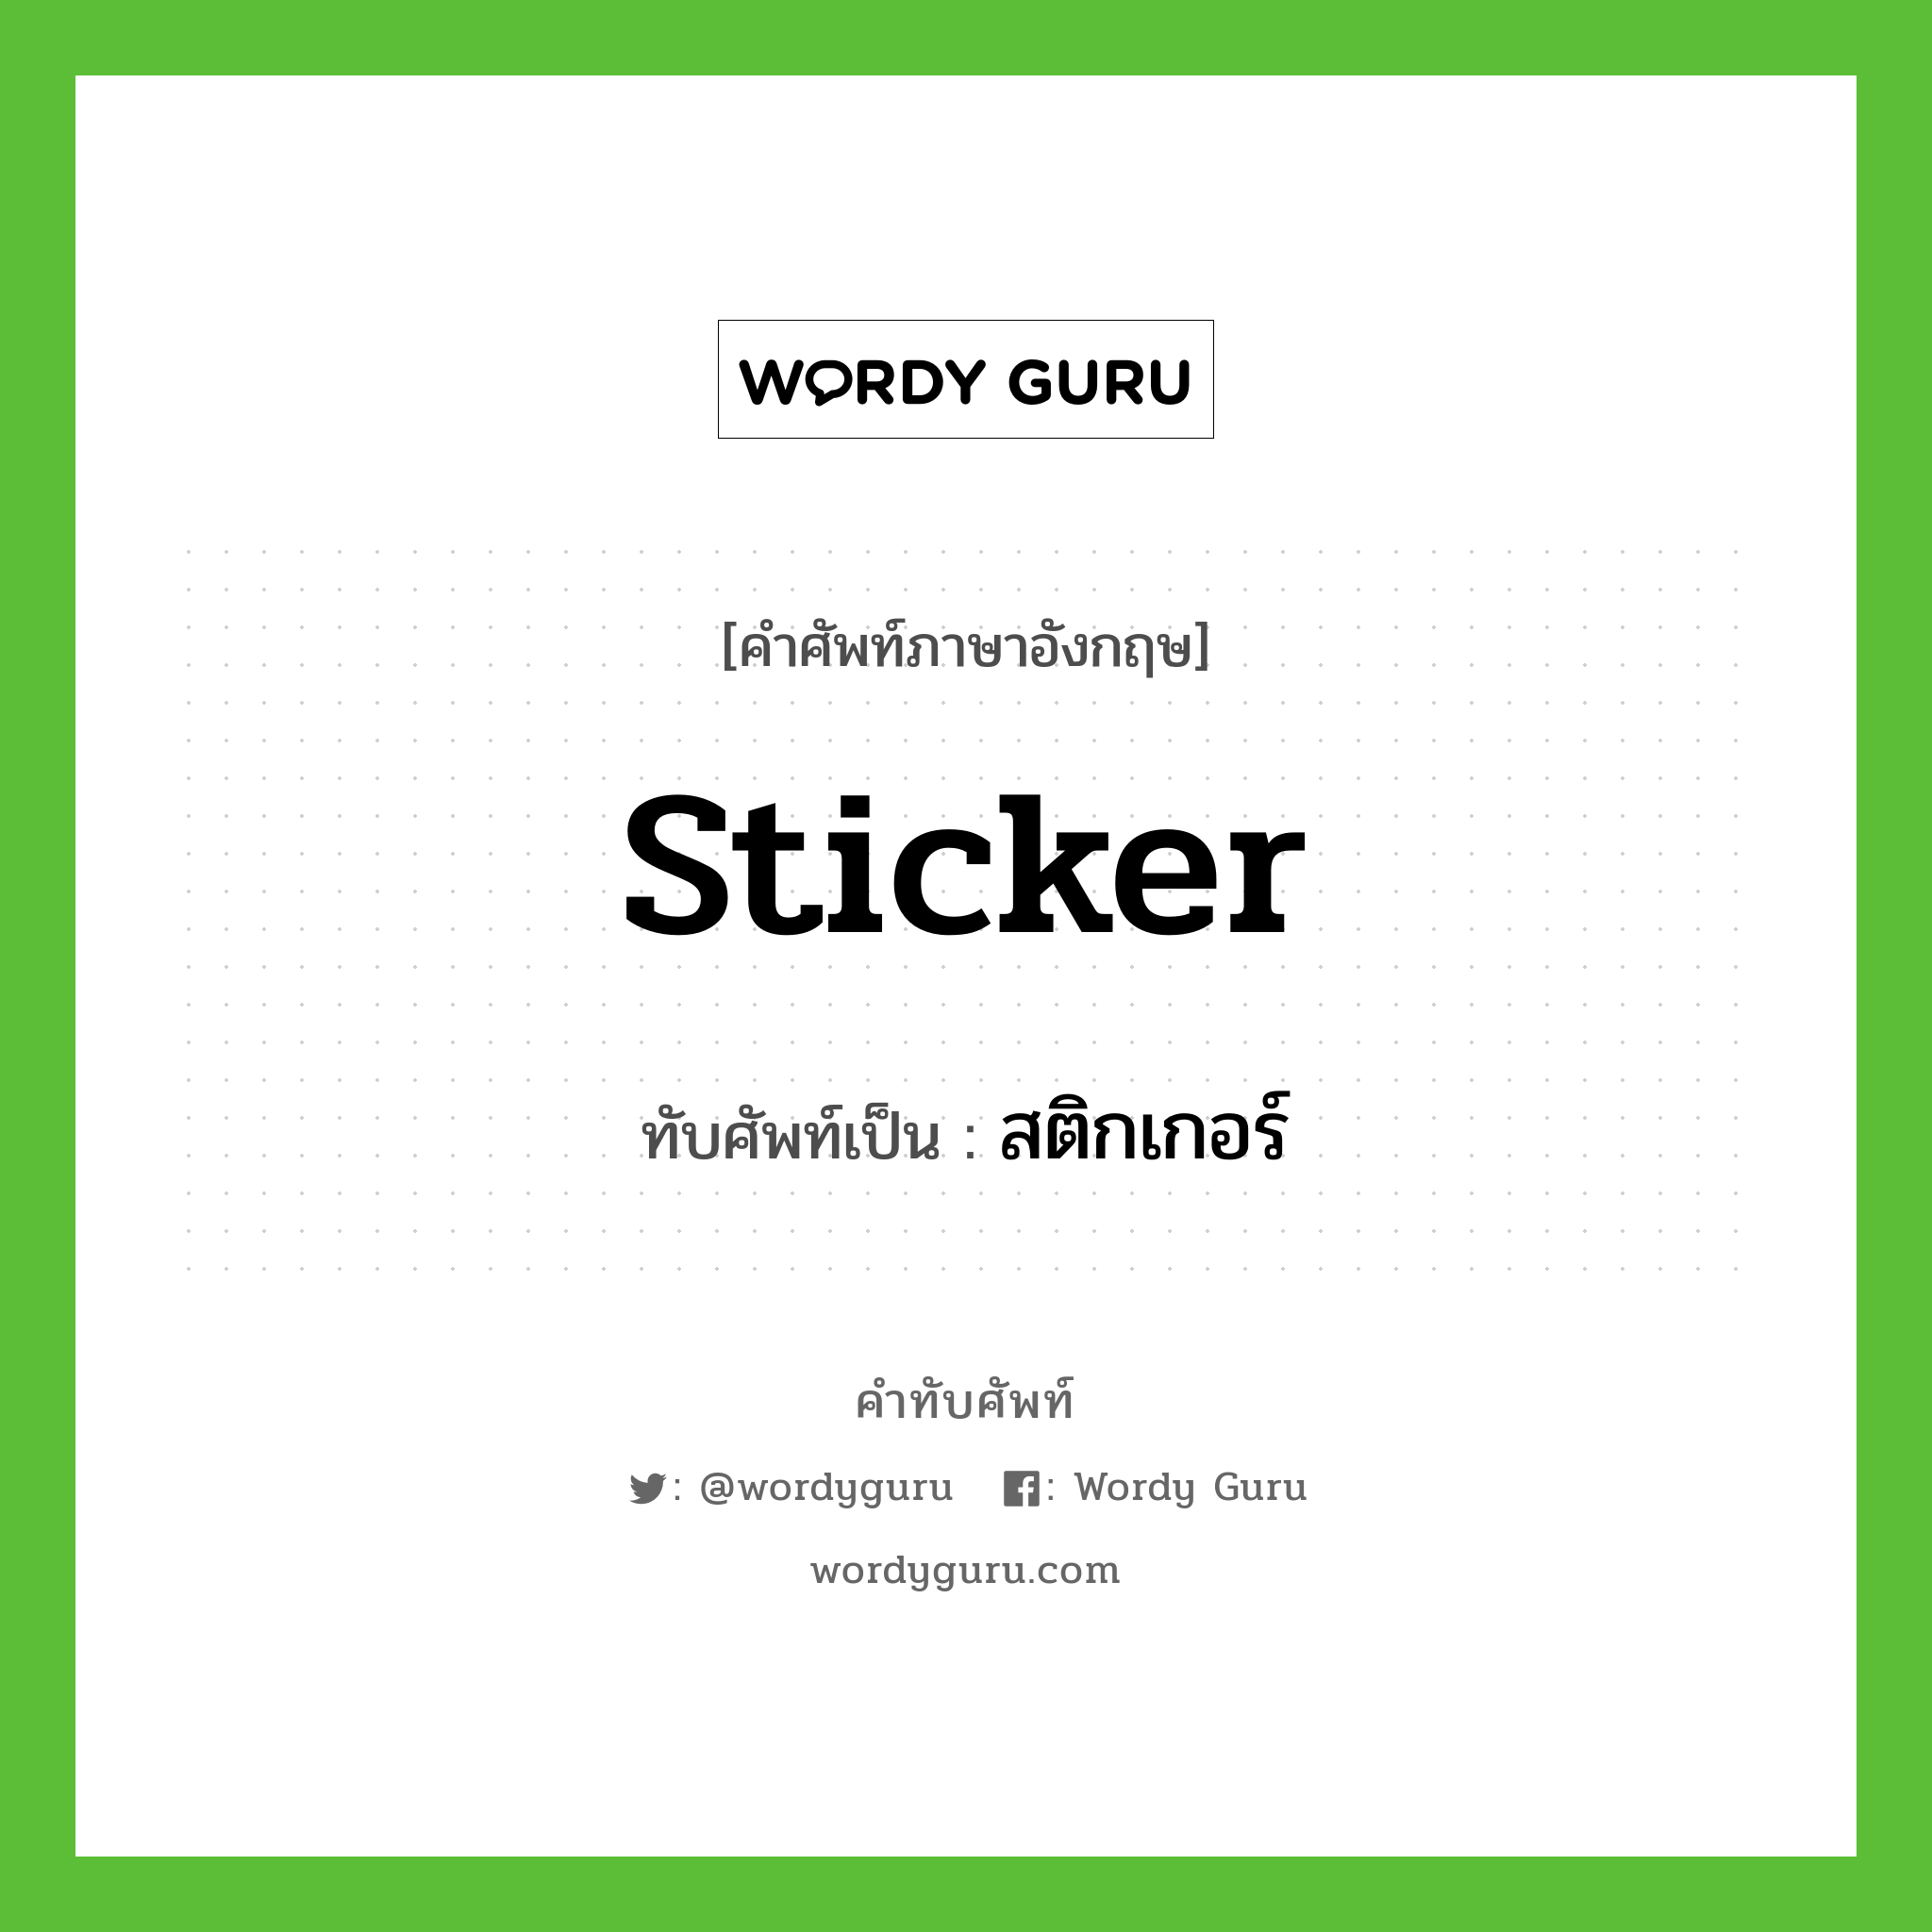 Sticker เขียนเป็นคำไทยว่าอะไร?, คำศัพท์ภาษาอังกฤษ Sticker ทับศัพท์เป็น สติกเกอร์